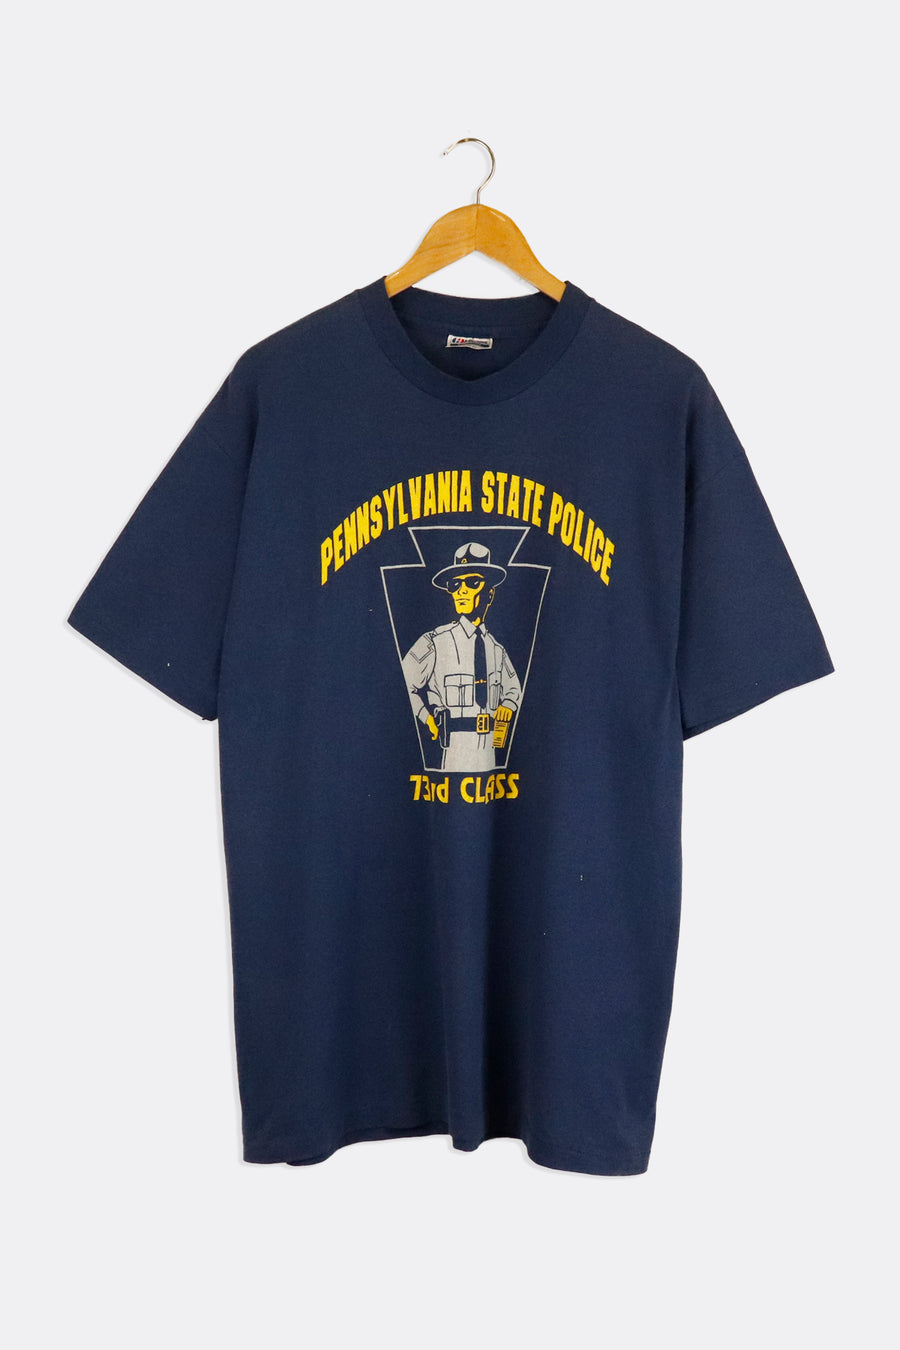 Vintage Pennsylvania State Police 73rd Class T Shirt Sz XL